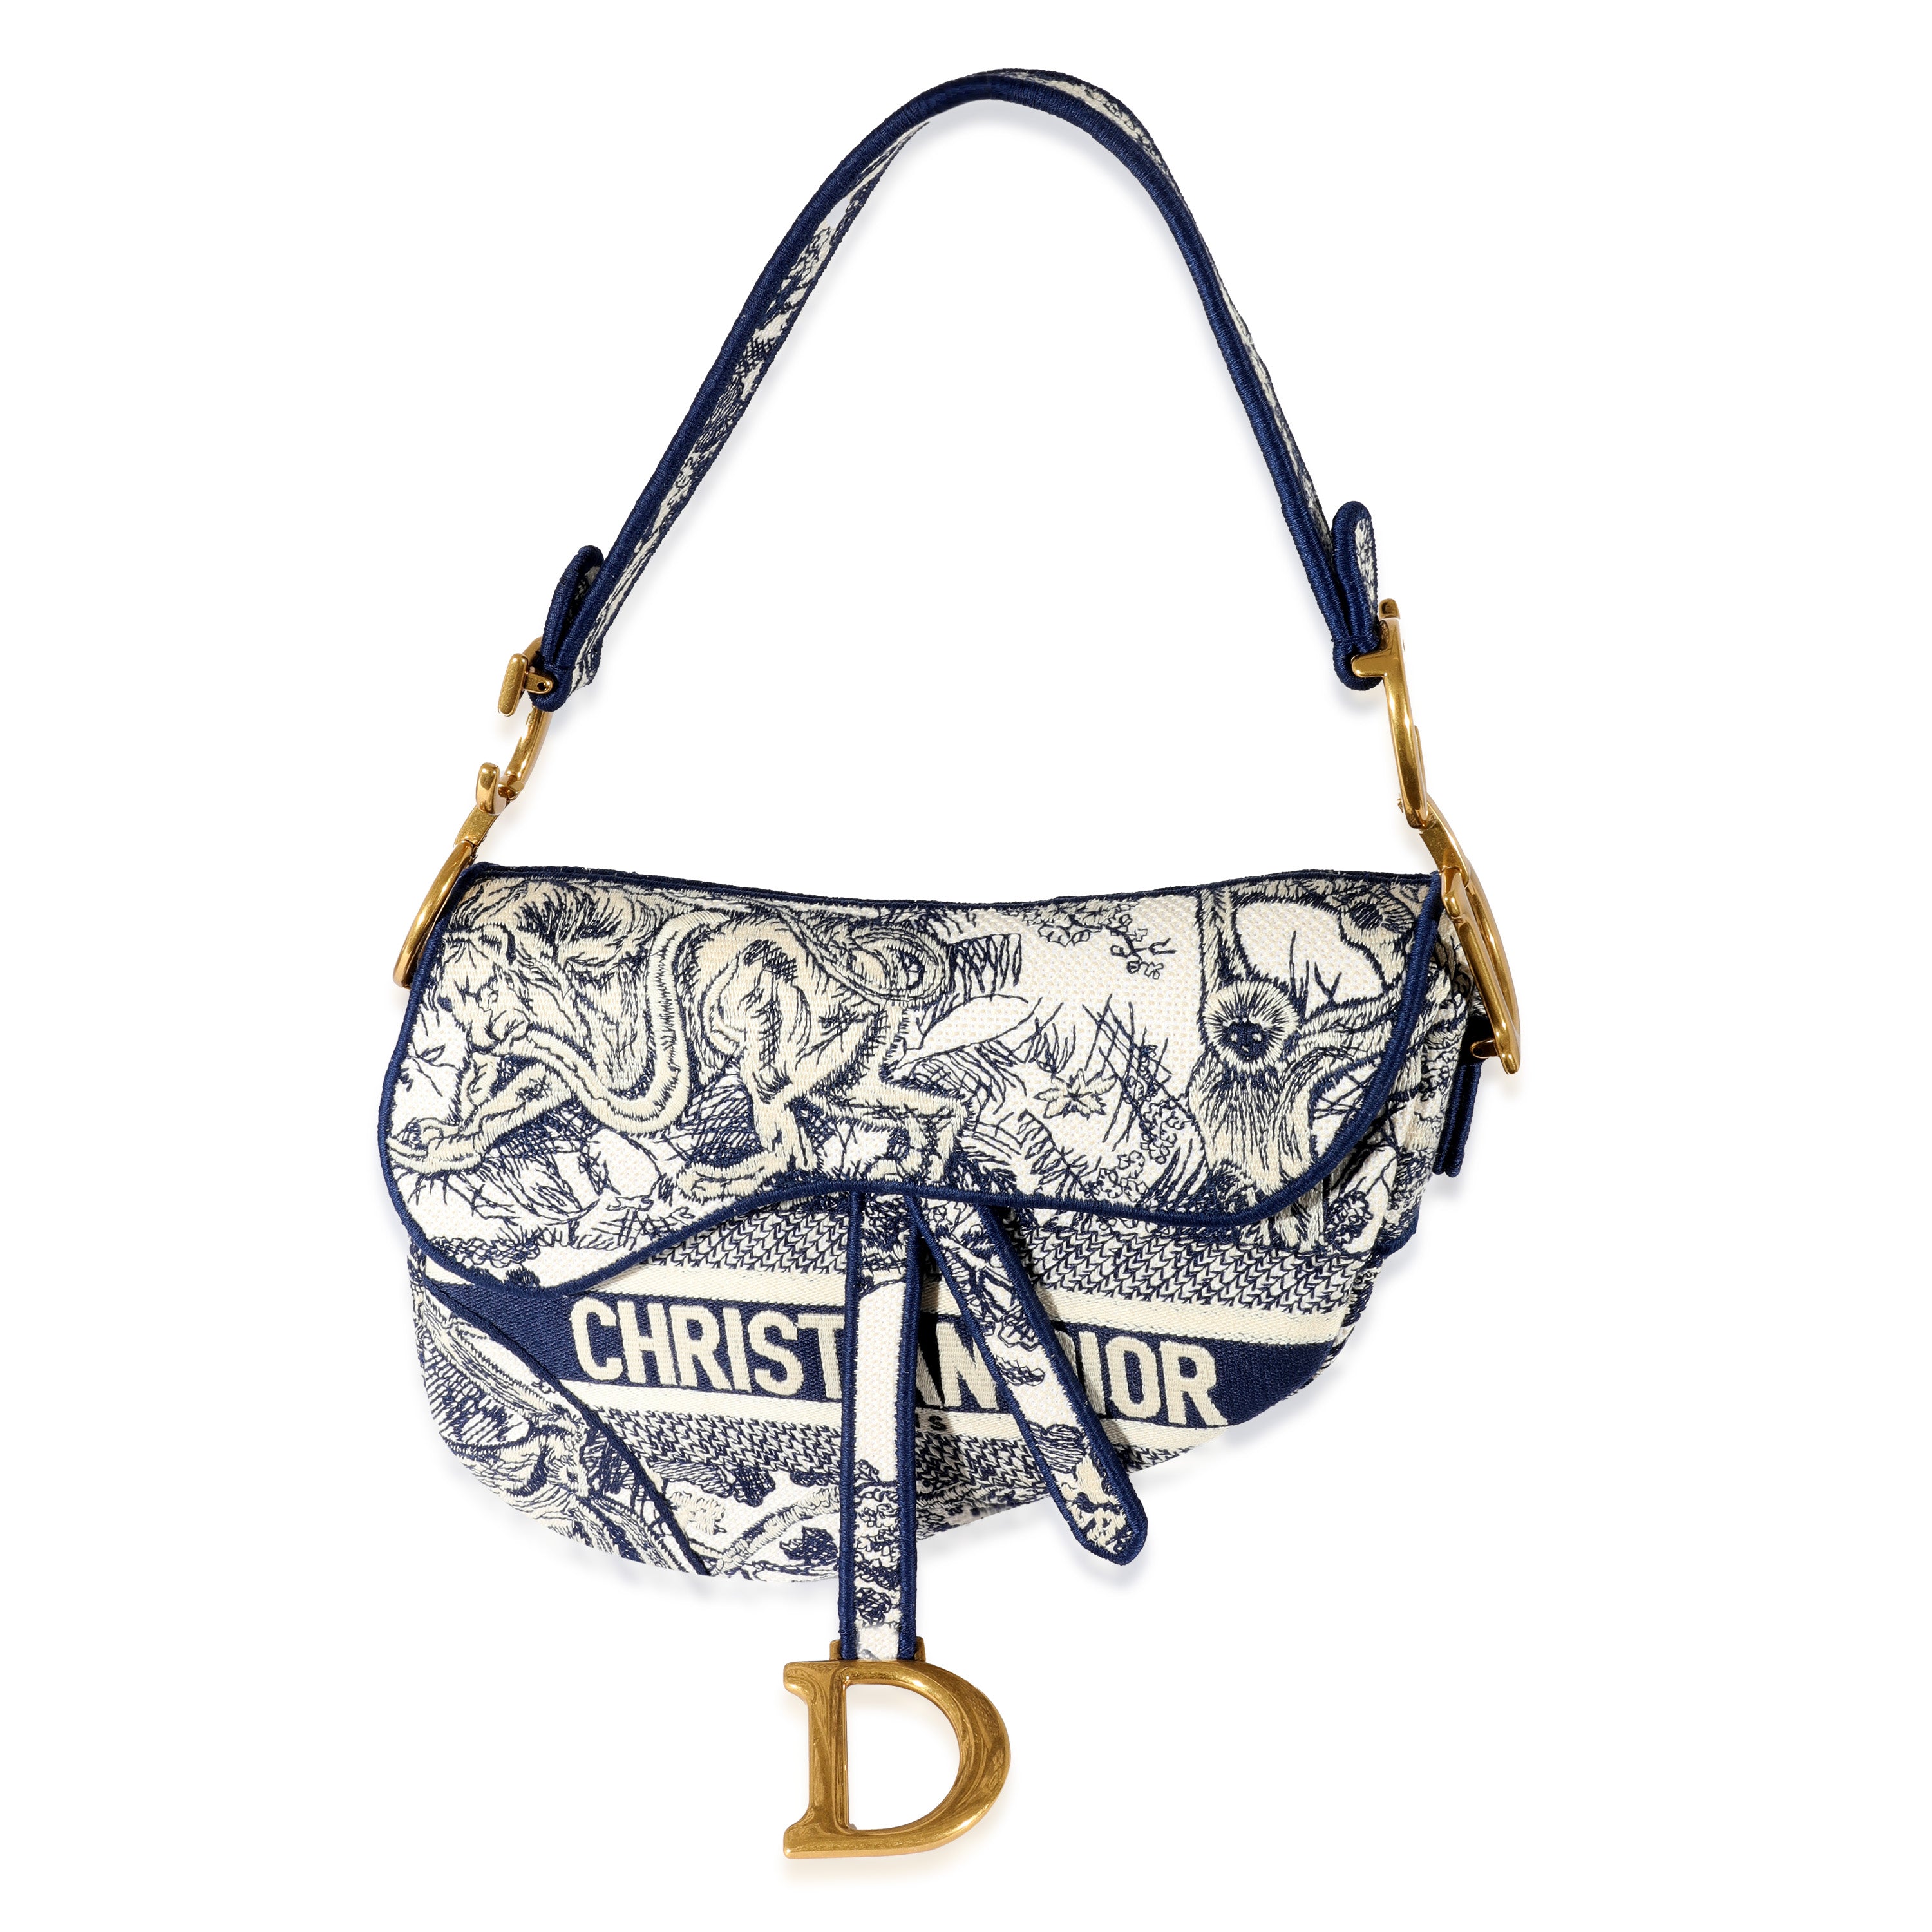 Dior Saddle Bag Blue 